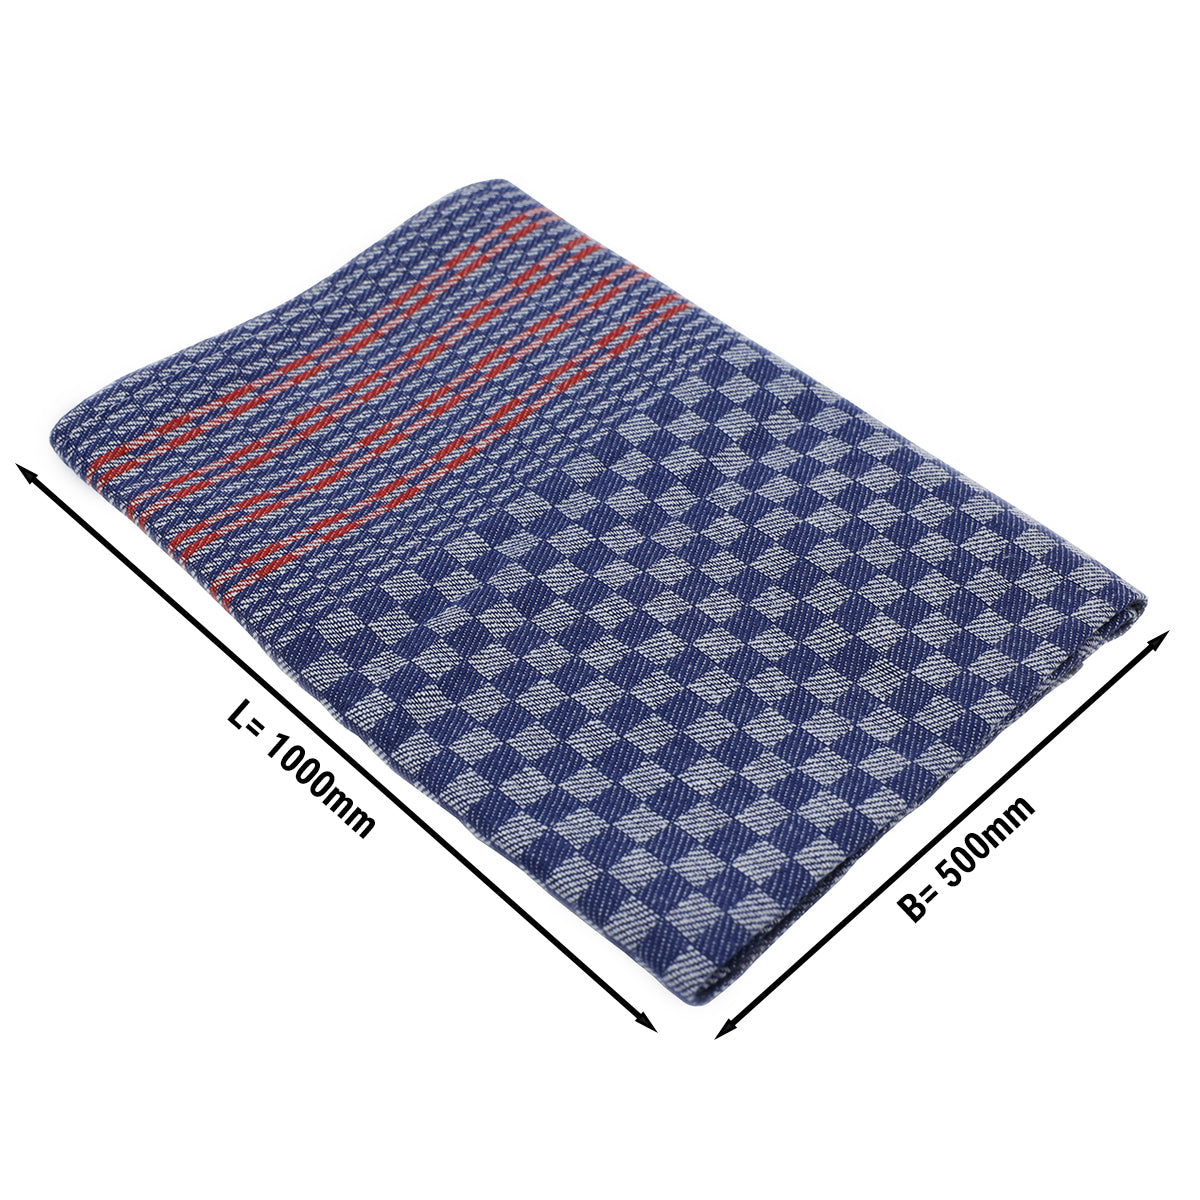 (150 stk) Håndkle i halvlin - 50 x 100 cm - blårutete med røde striper